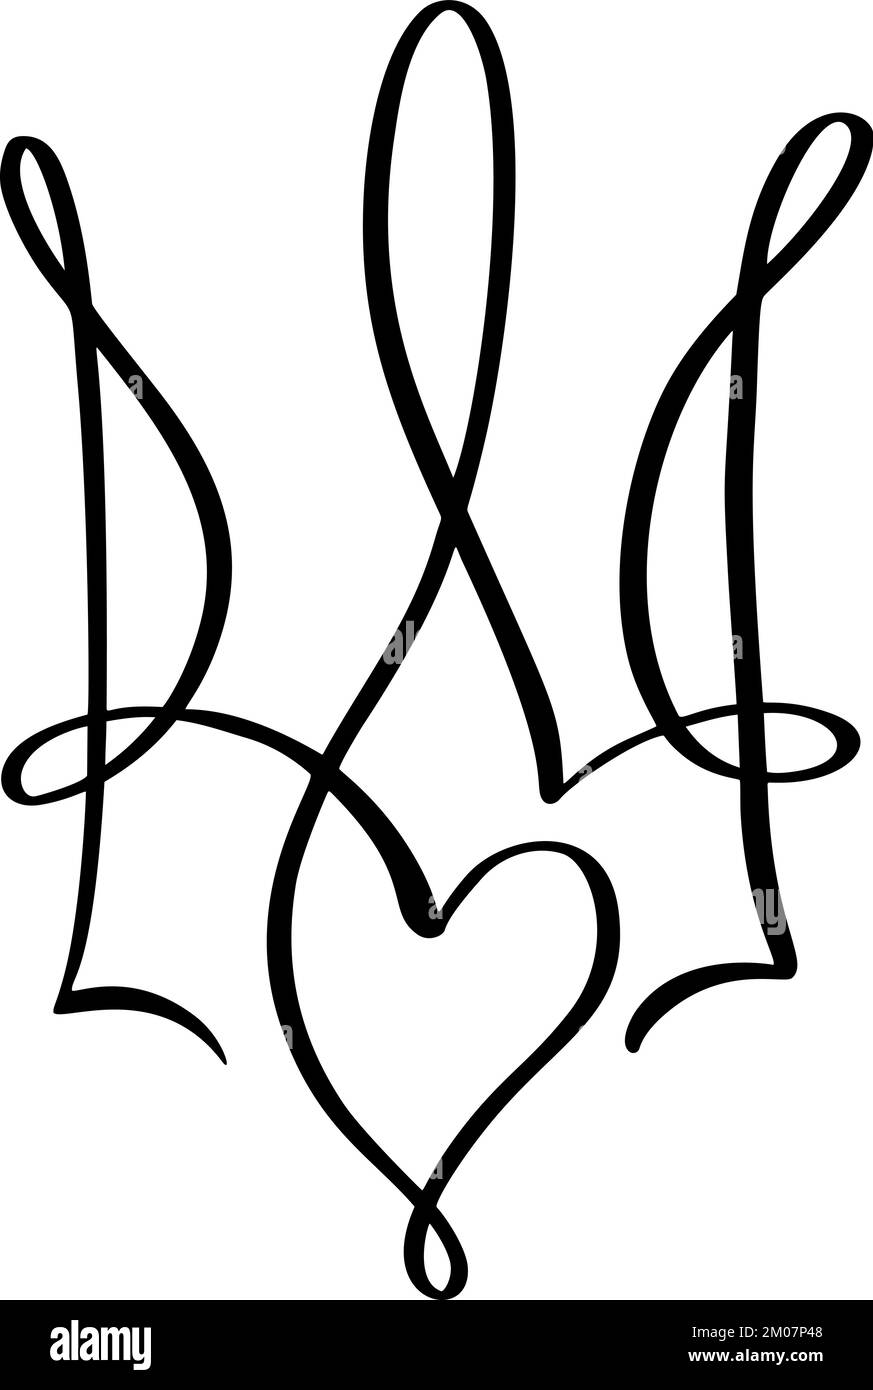 Símbolo nacional ucraniano Trident icono con amor de corazón. Vector Mano Dibuja Calligraphy Escudo de Armas de Ucrania Estado emblema ilustración de color negro Ilustración del Vector